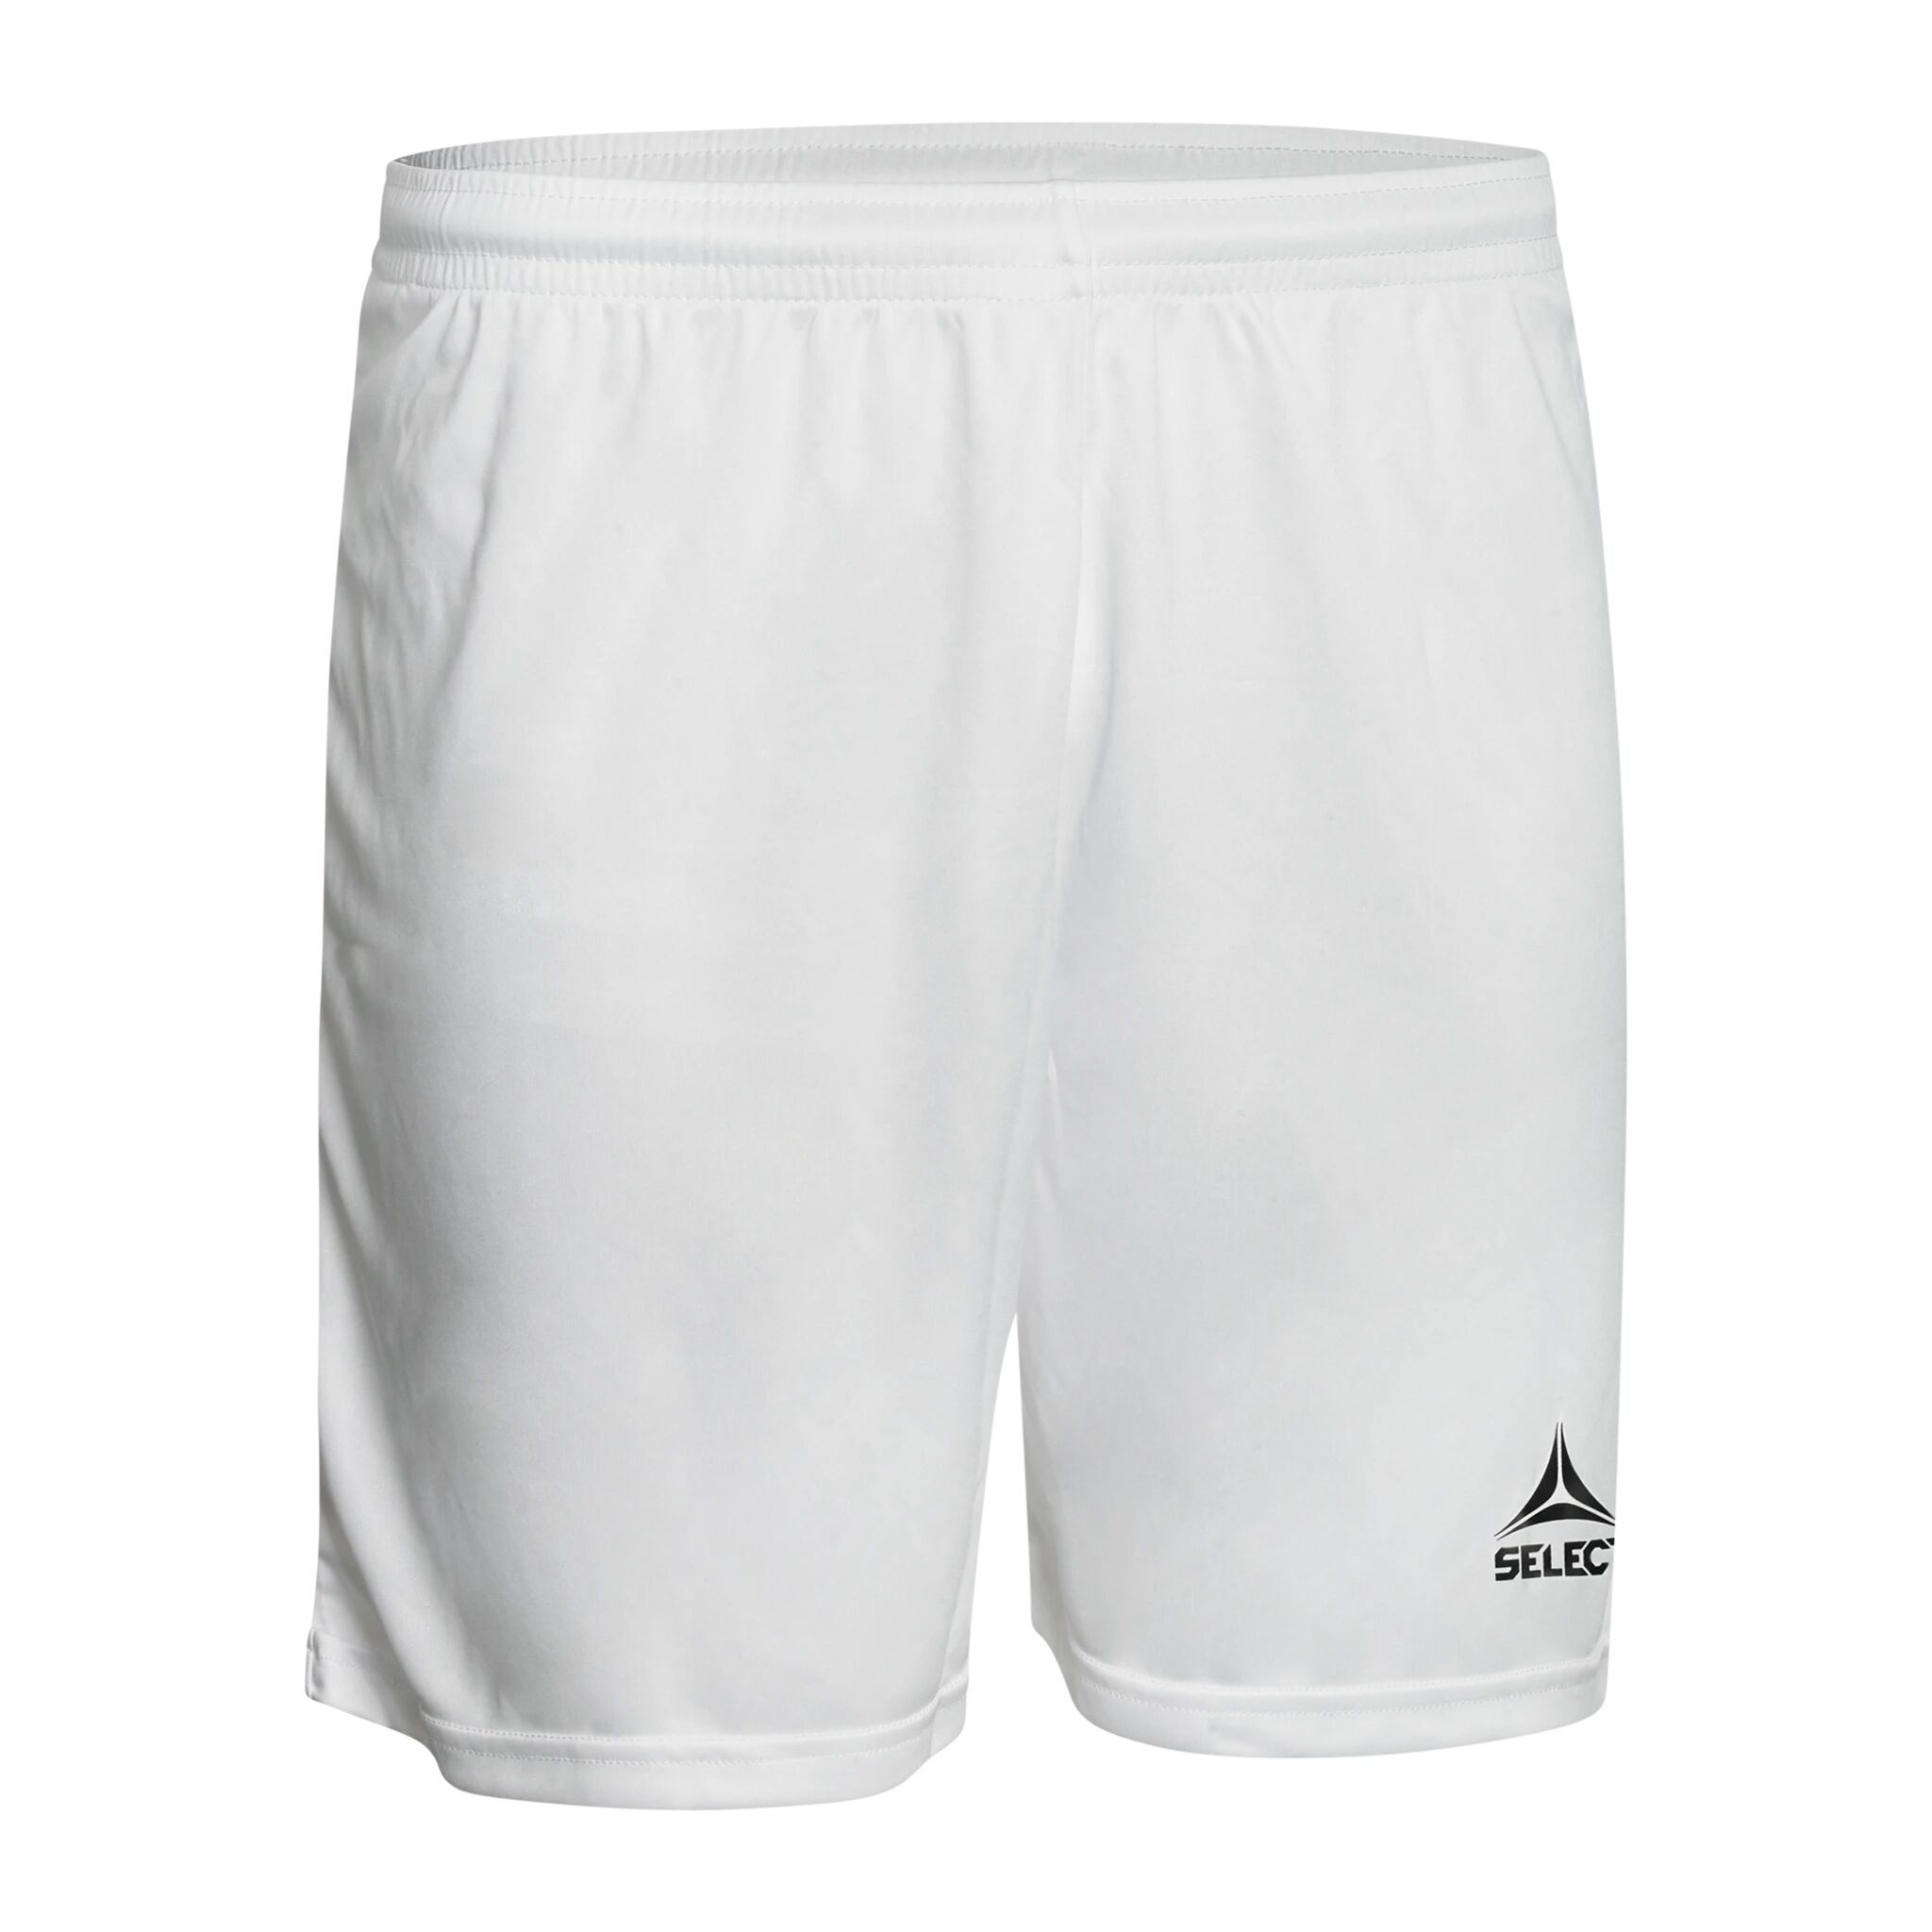 Select Player shorts Pisa, shorts senior 152 White